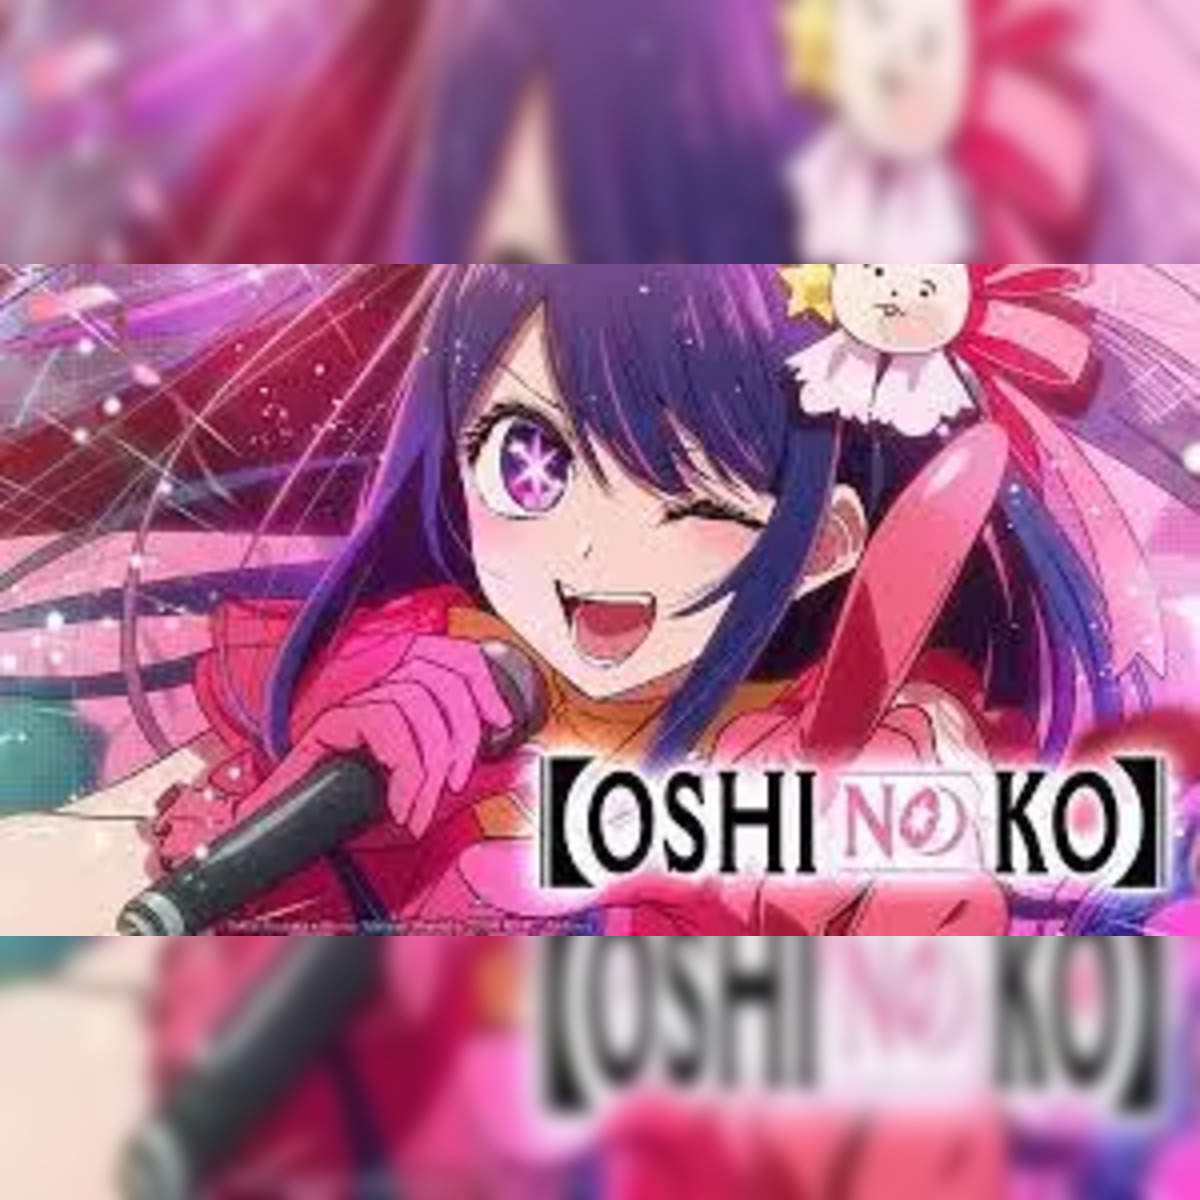 Oshi no Ko Anime Announced with Main Staff, Teaser Visual